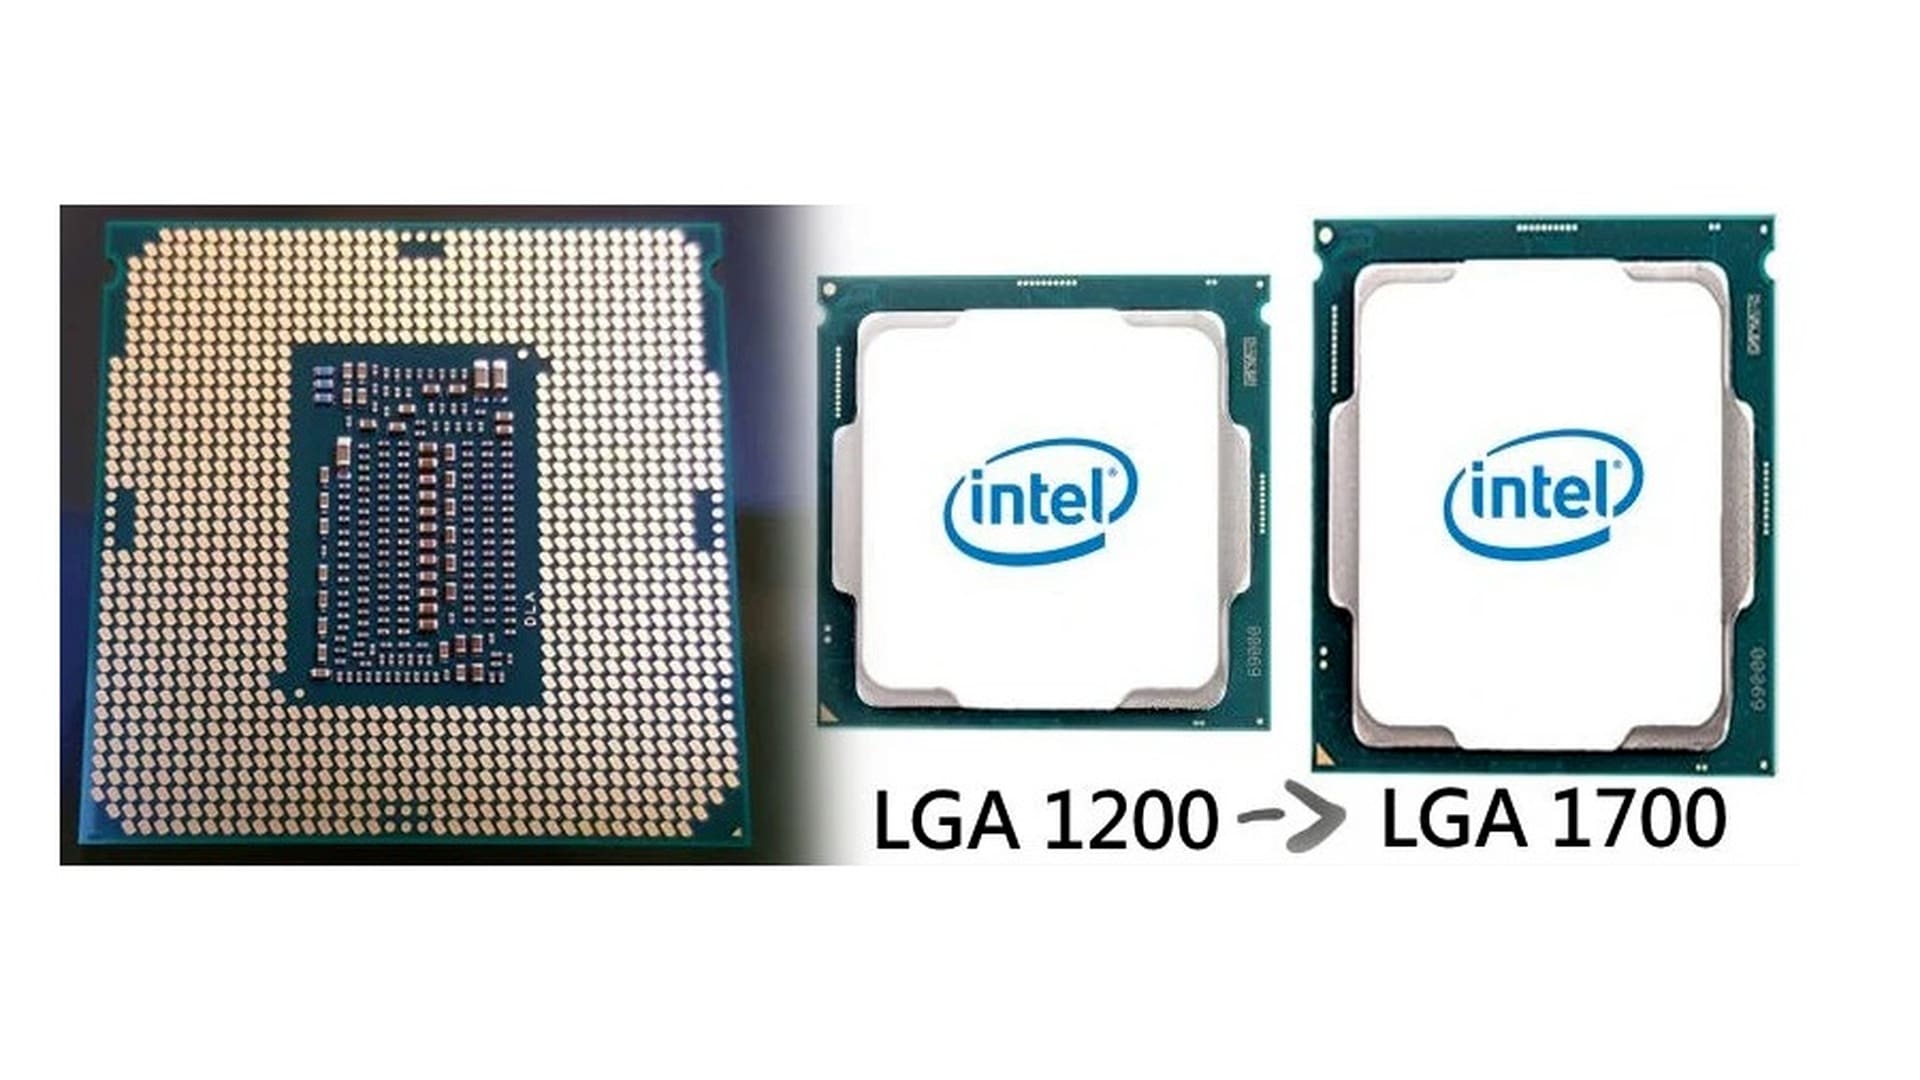 Процессор intel core i5 lga 1700. Сокет Интел 1700. LGA 1700 процессоры Intel. LGA 1700 vs LGA 1200 процессор. Сокет Интел лга 1700.